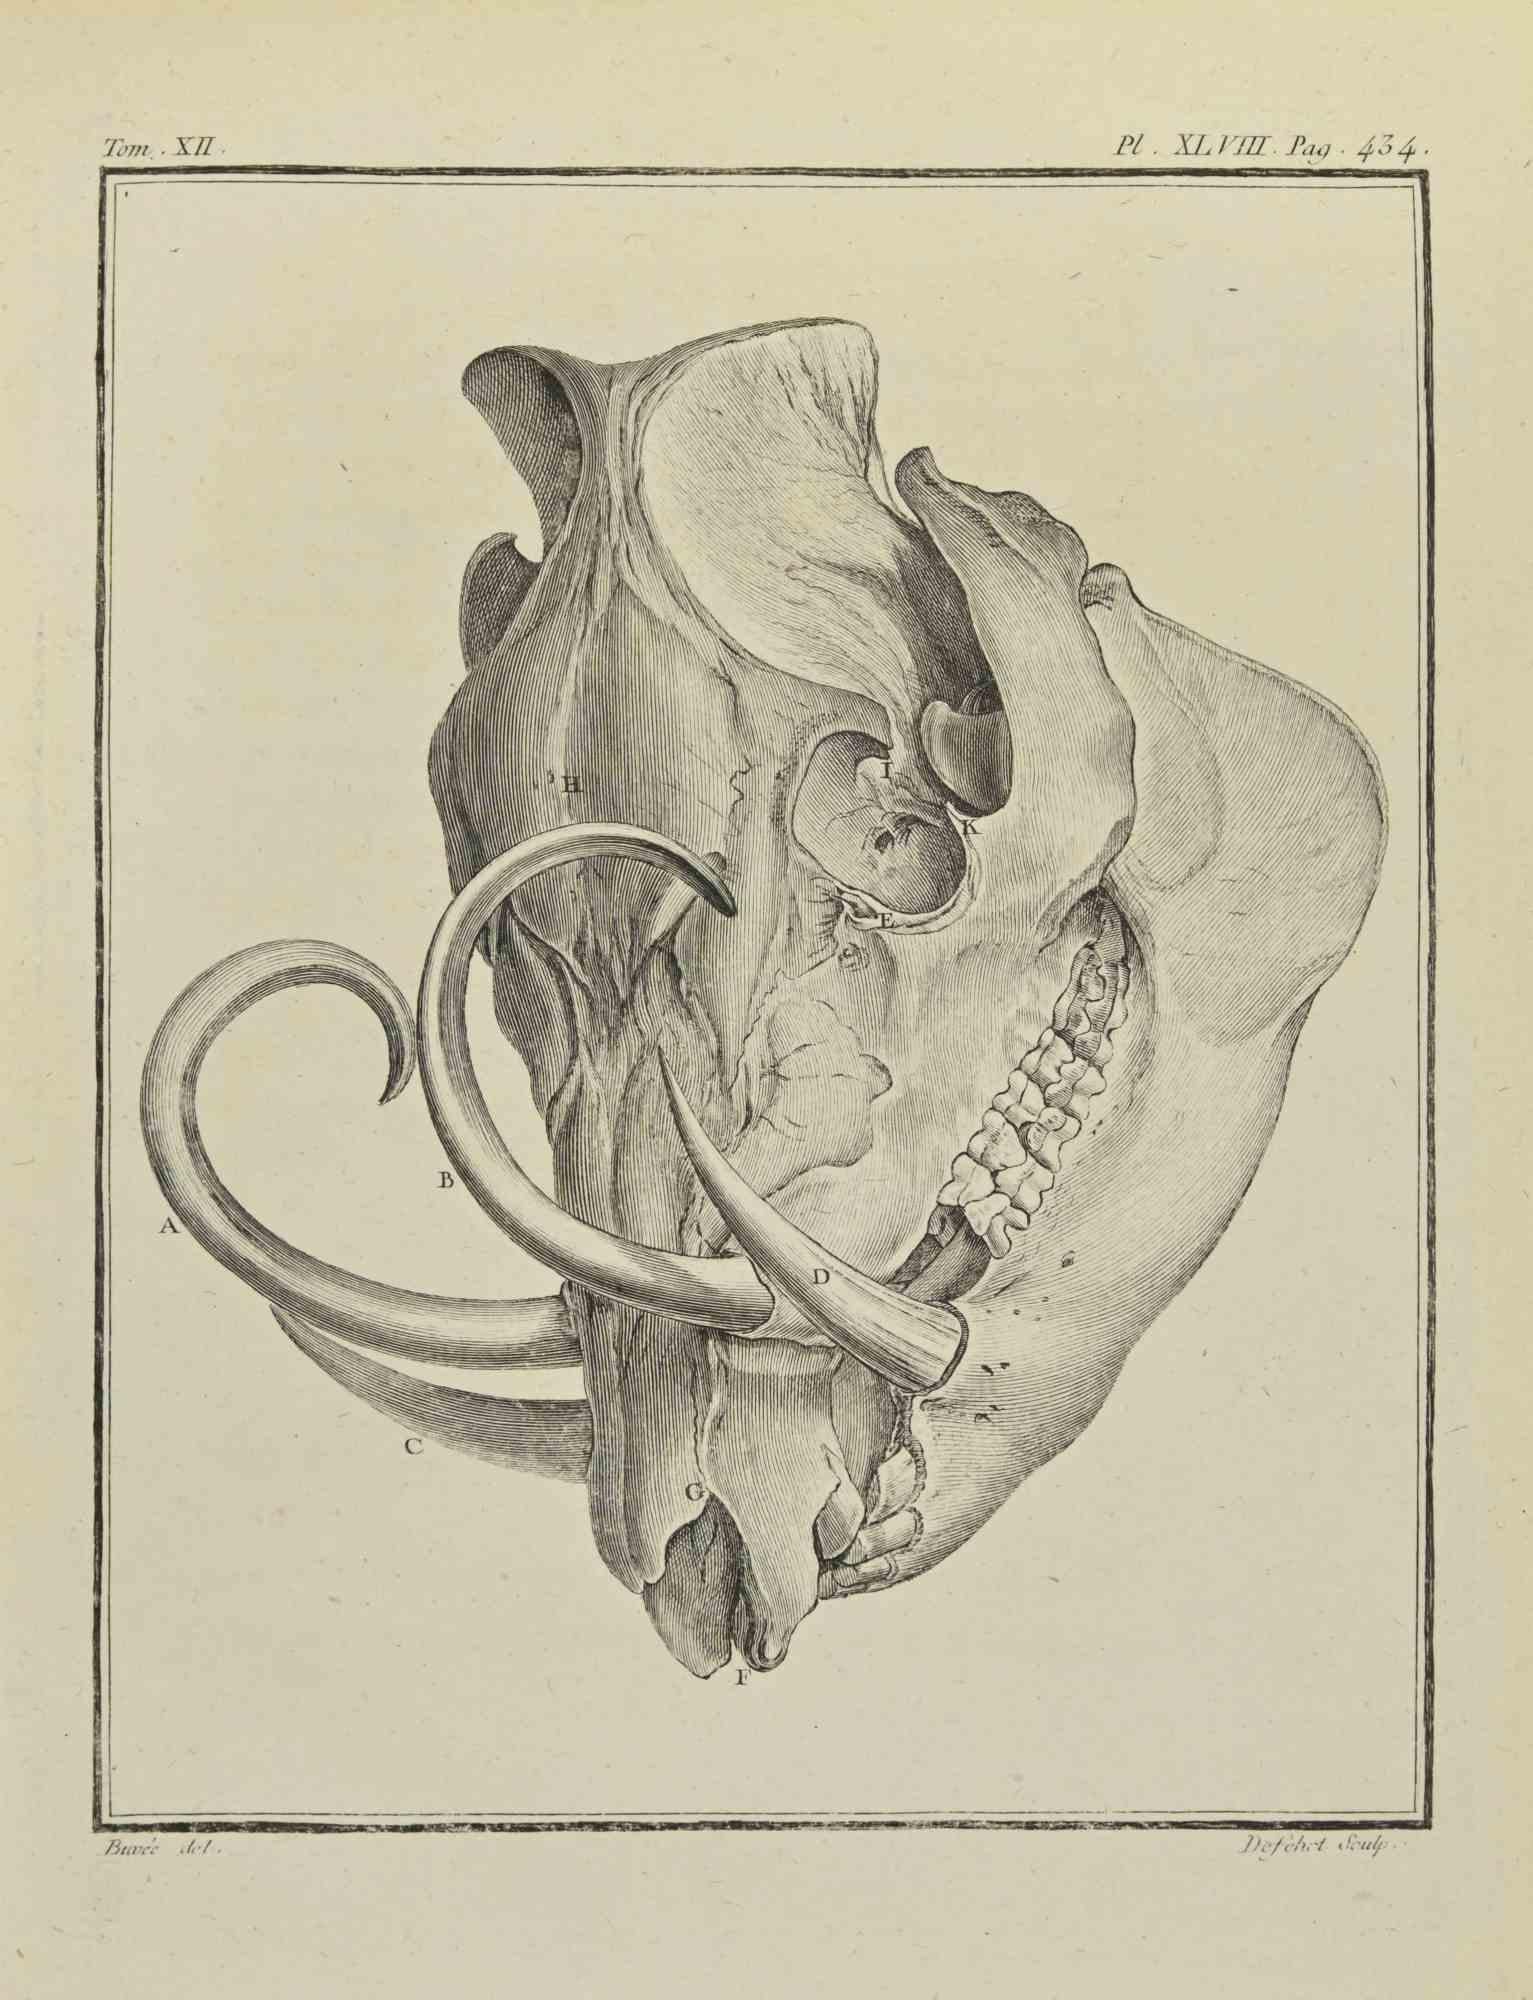 The Skeleton - Etching by Antoine Defehrt  - 1771